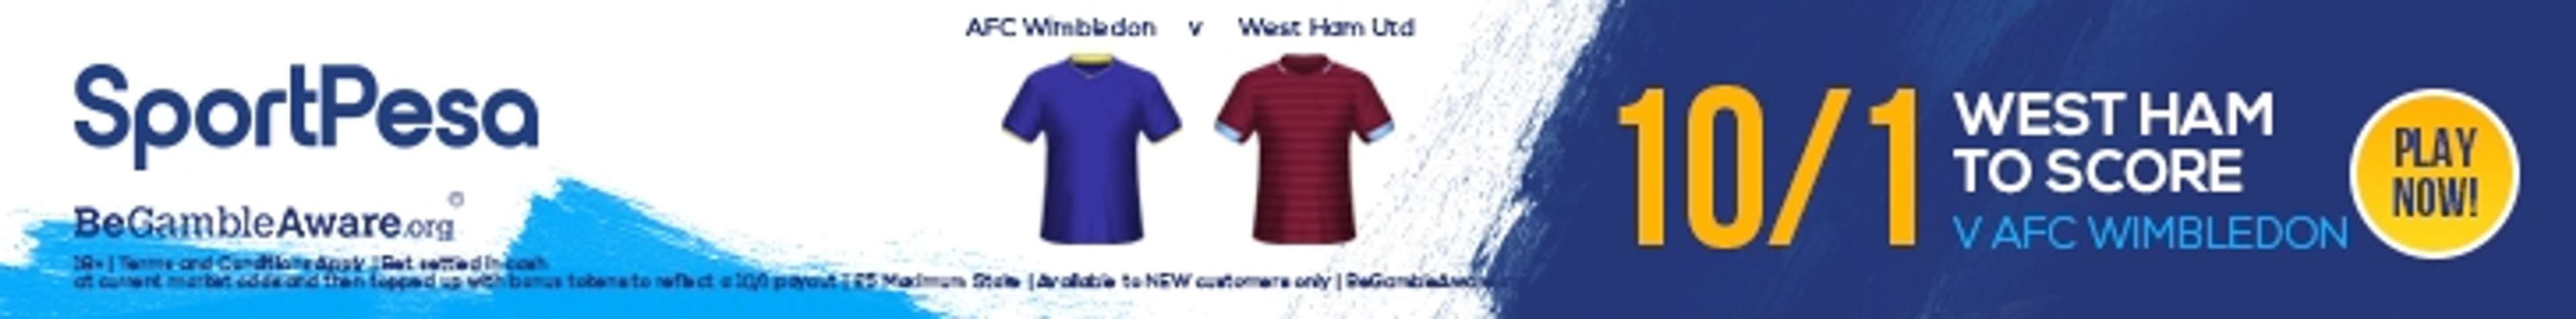 West Ham enhanced offer SportPesa